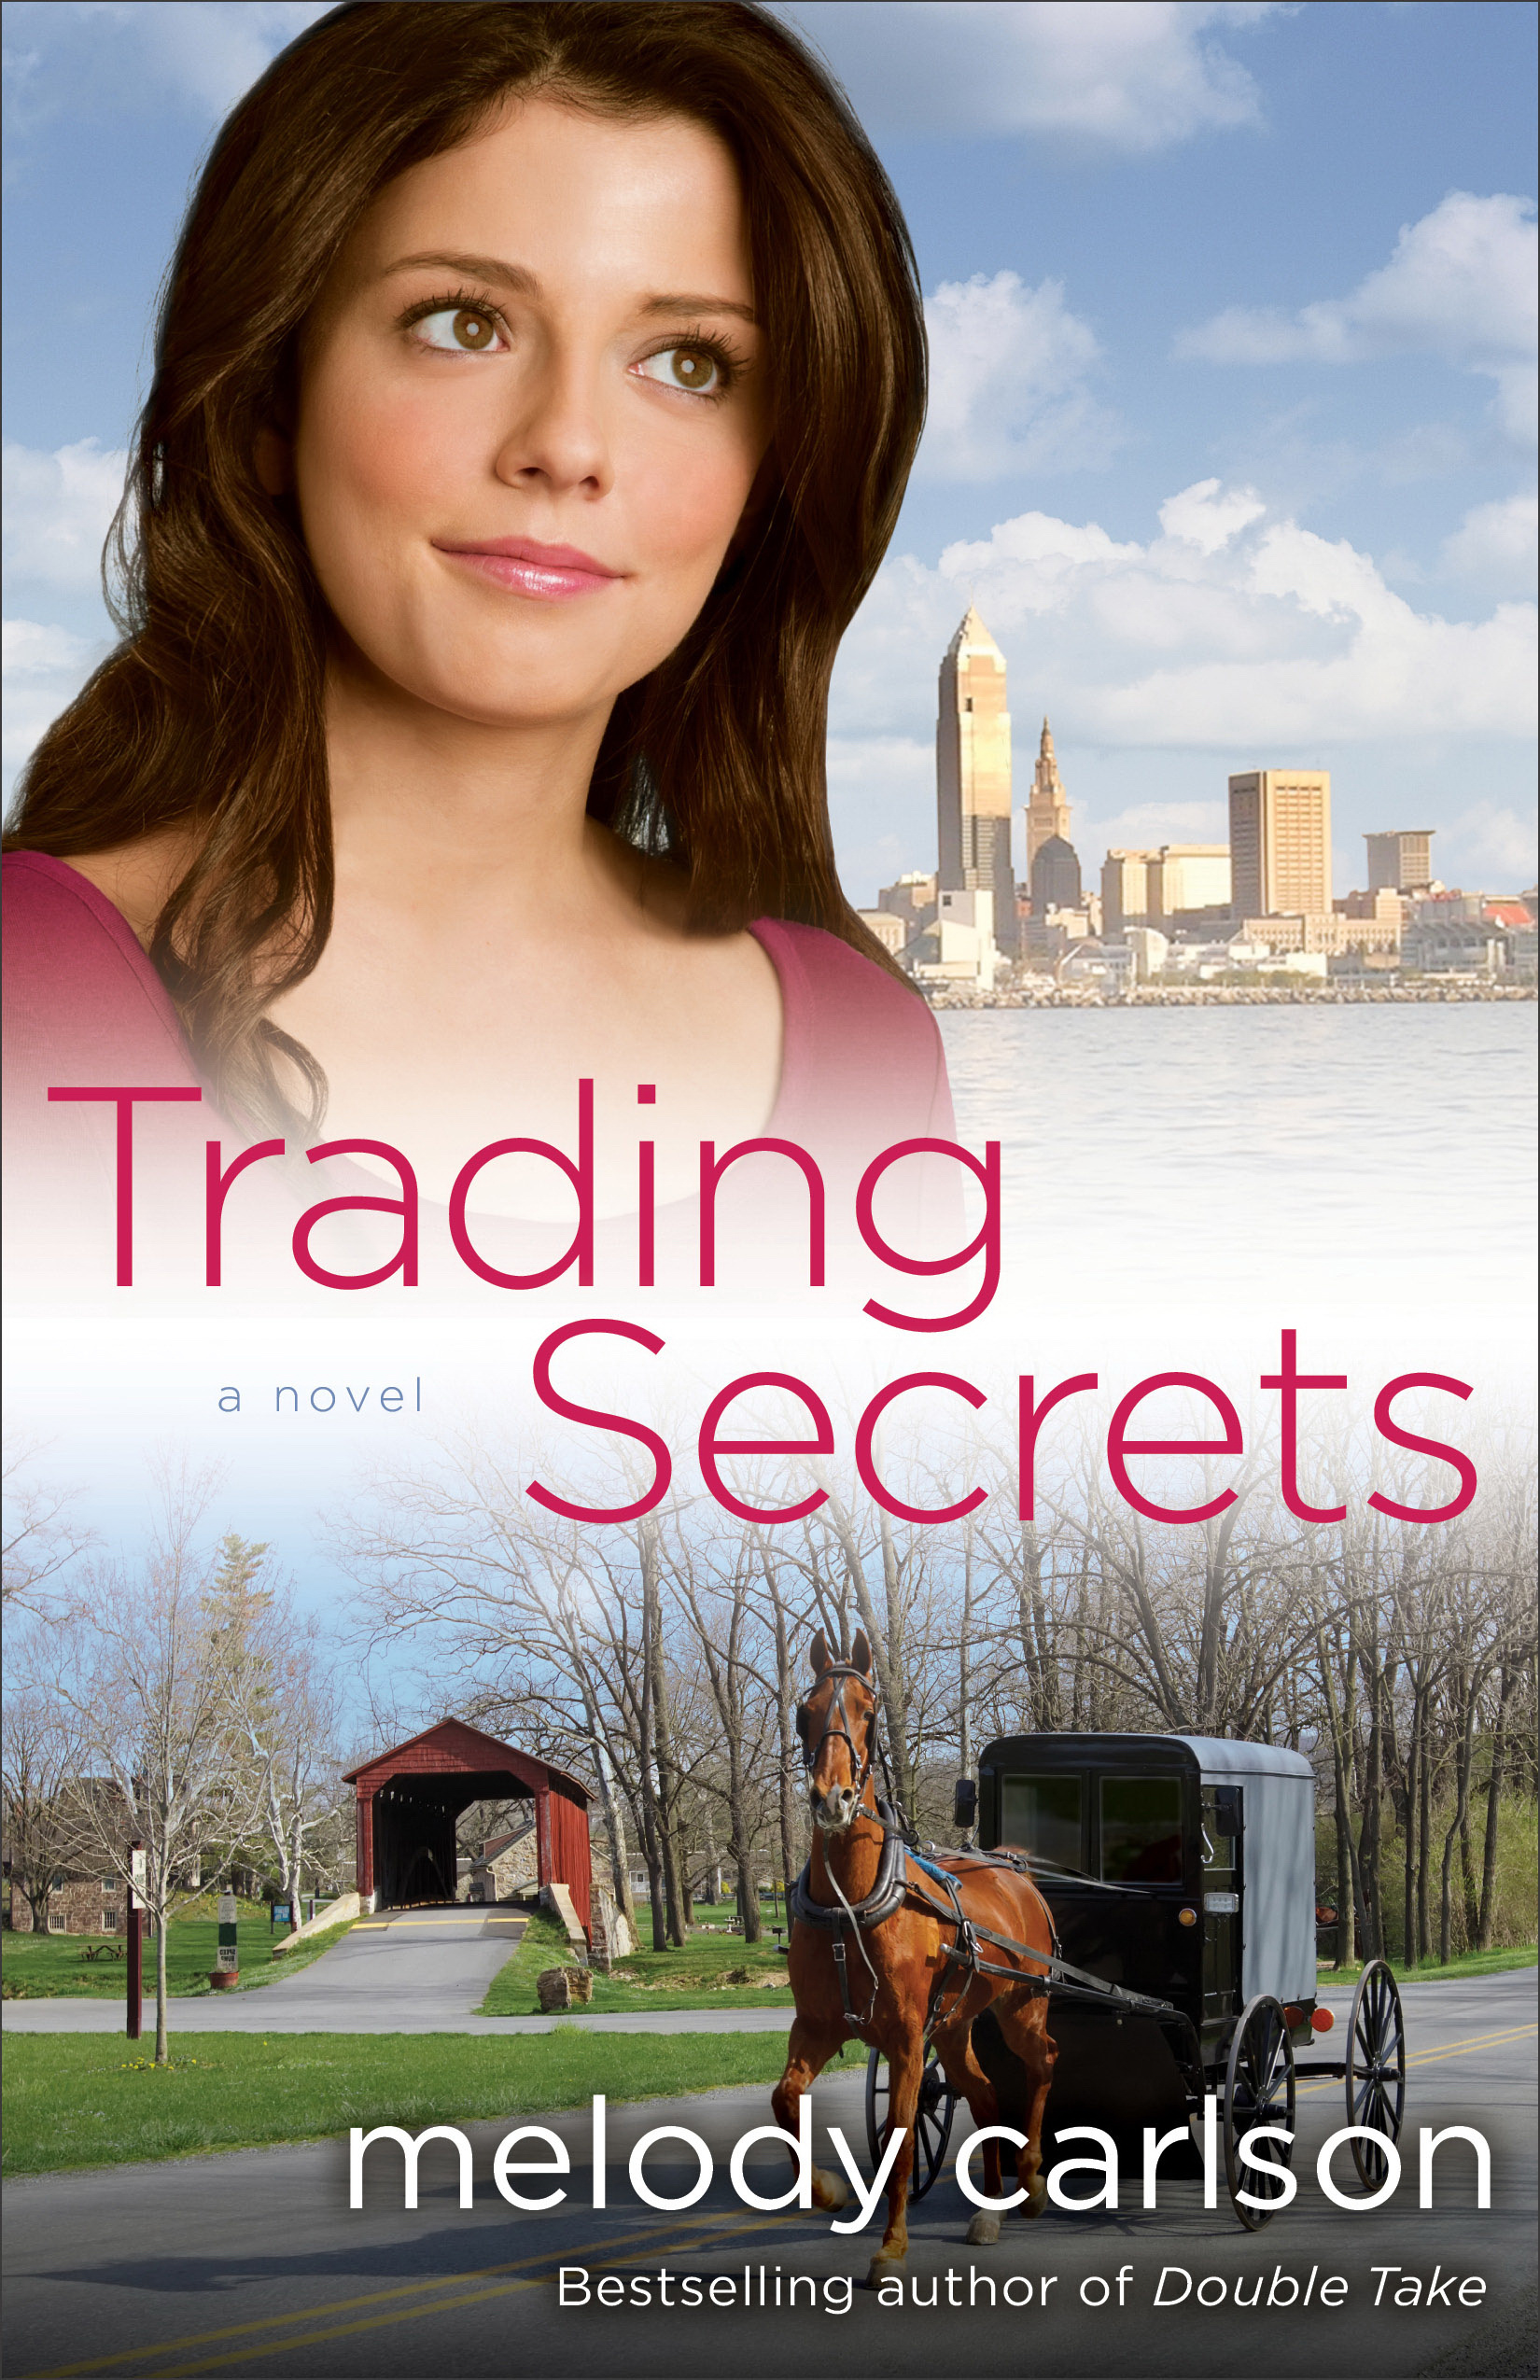 Trading Secrets by Melody Carlson